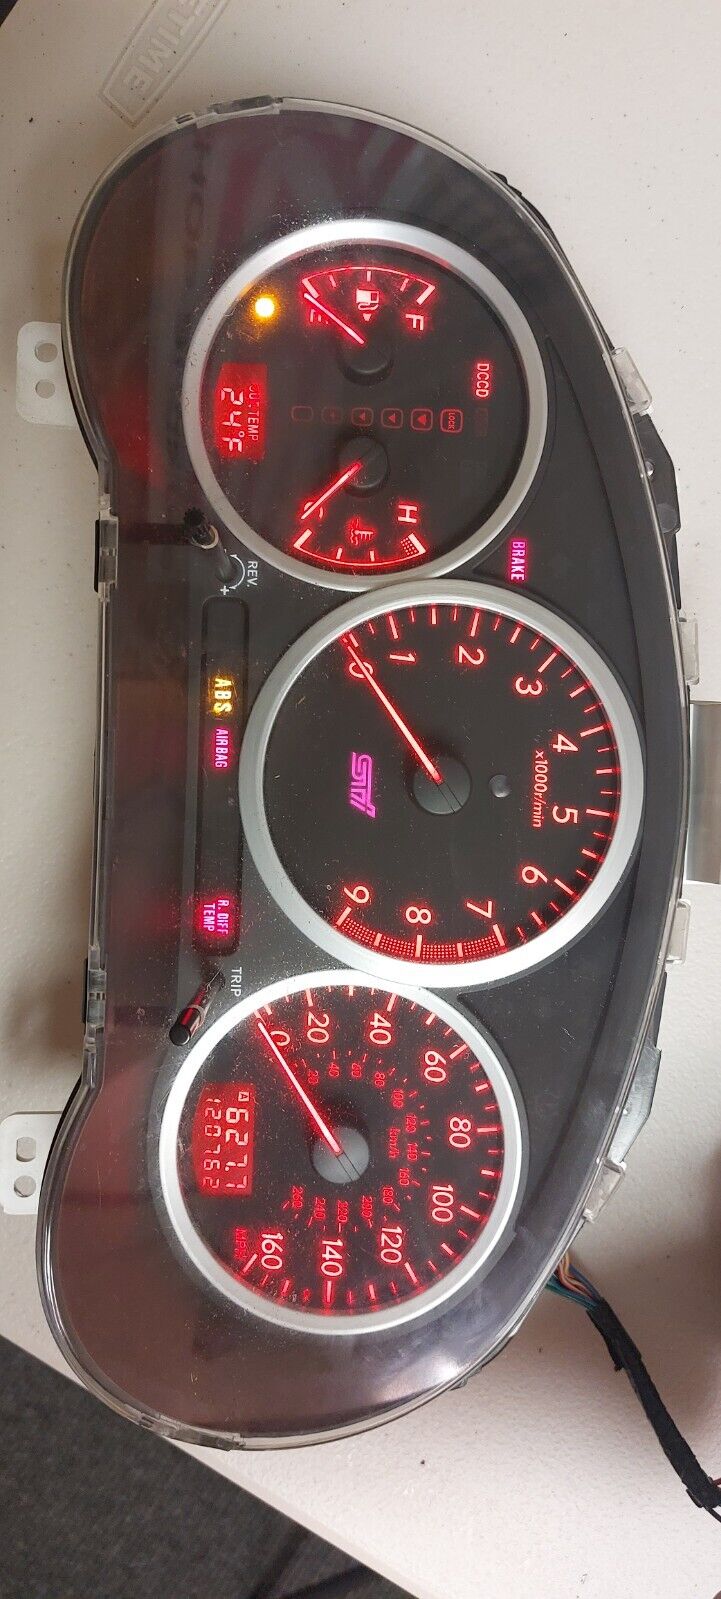 2005 -2007 Subaru Impreza WRX STI Speedometer Instrument Gauge Cluster OEM 05-07